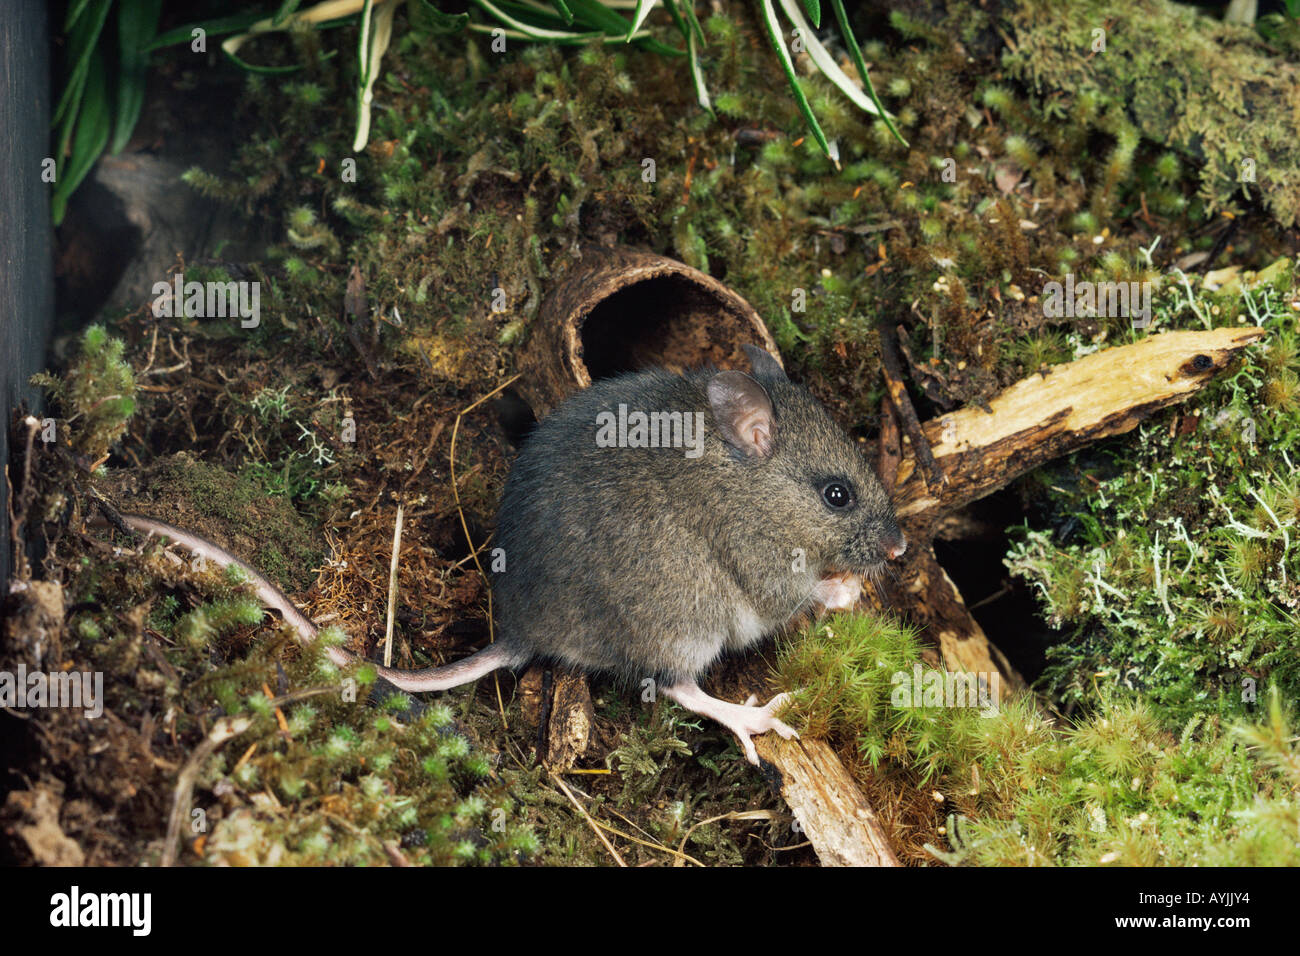 http://c8.alamy.com/comp/AYJJY4/long-tailed-mouse-pseudomys-higginsi-tasmanian-endemic-photographed-AYJJY4.jpg